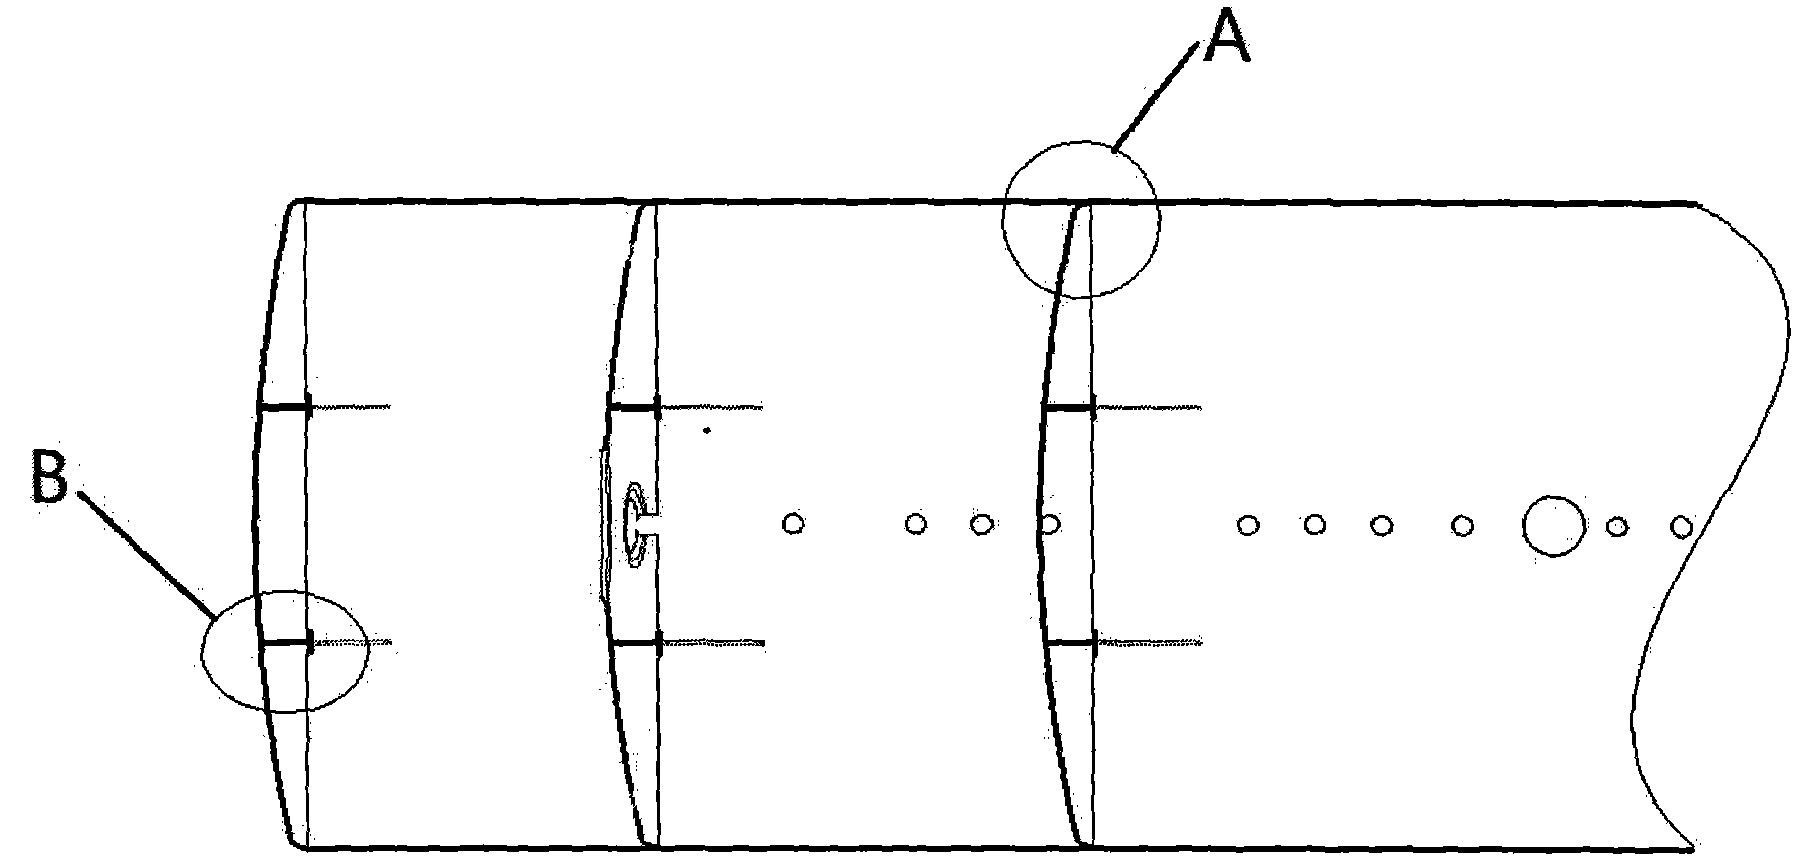 A method for measuring tank volume